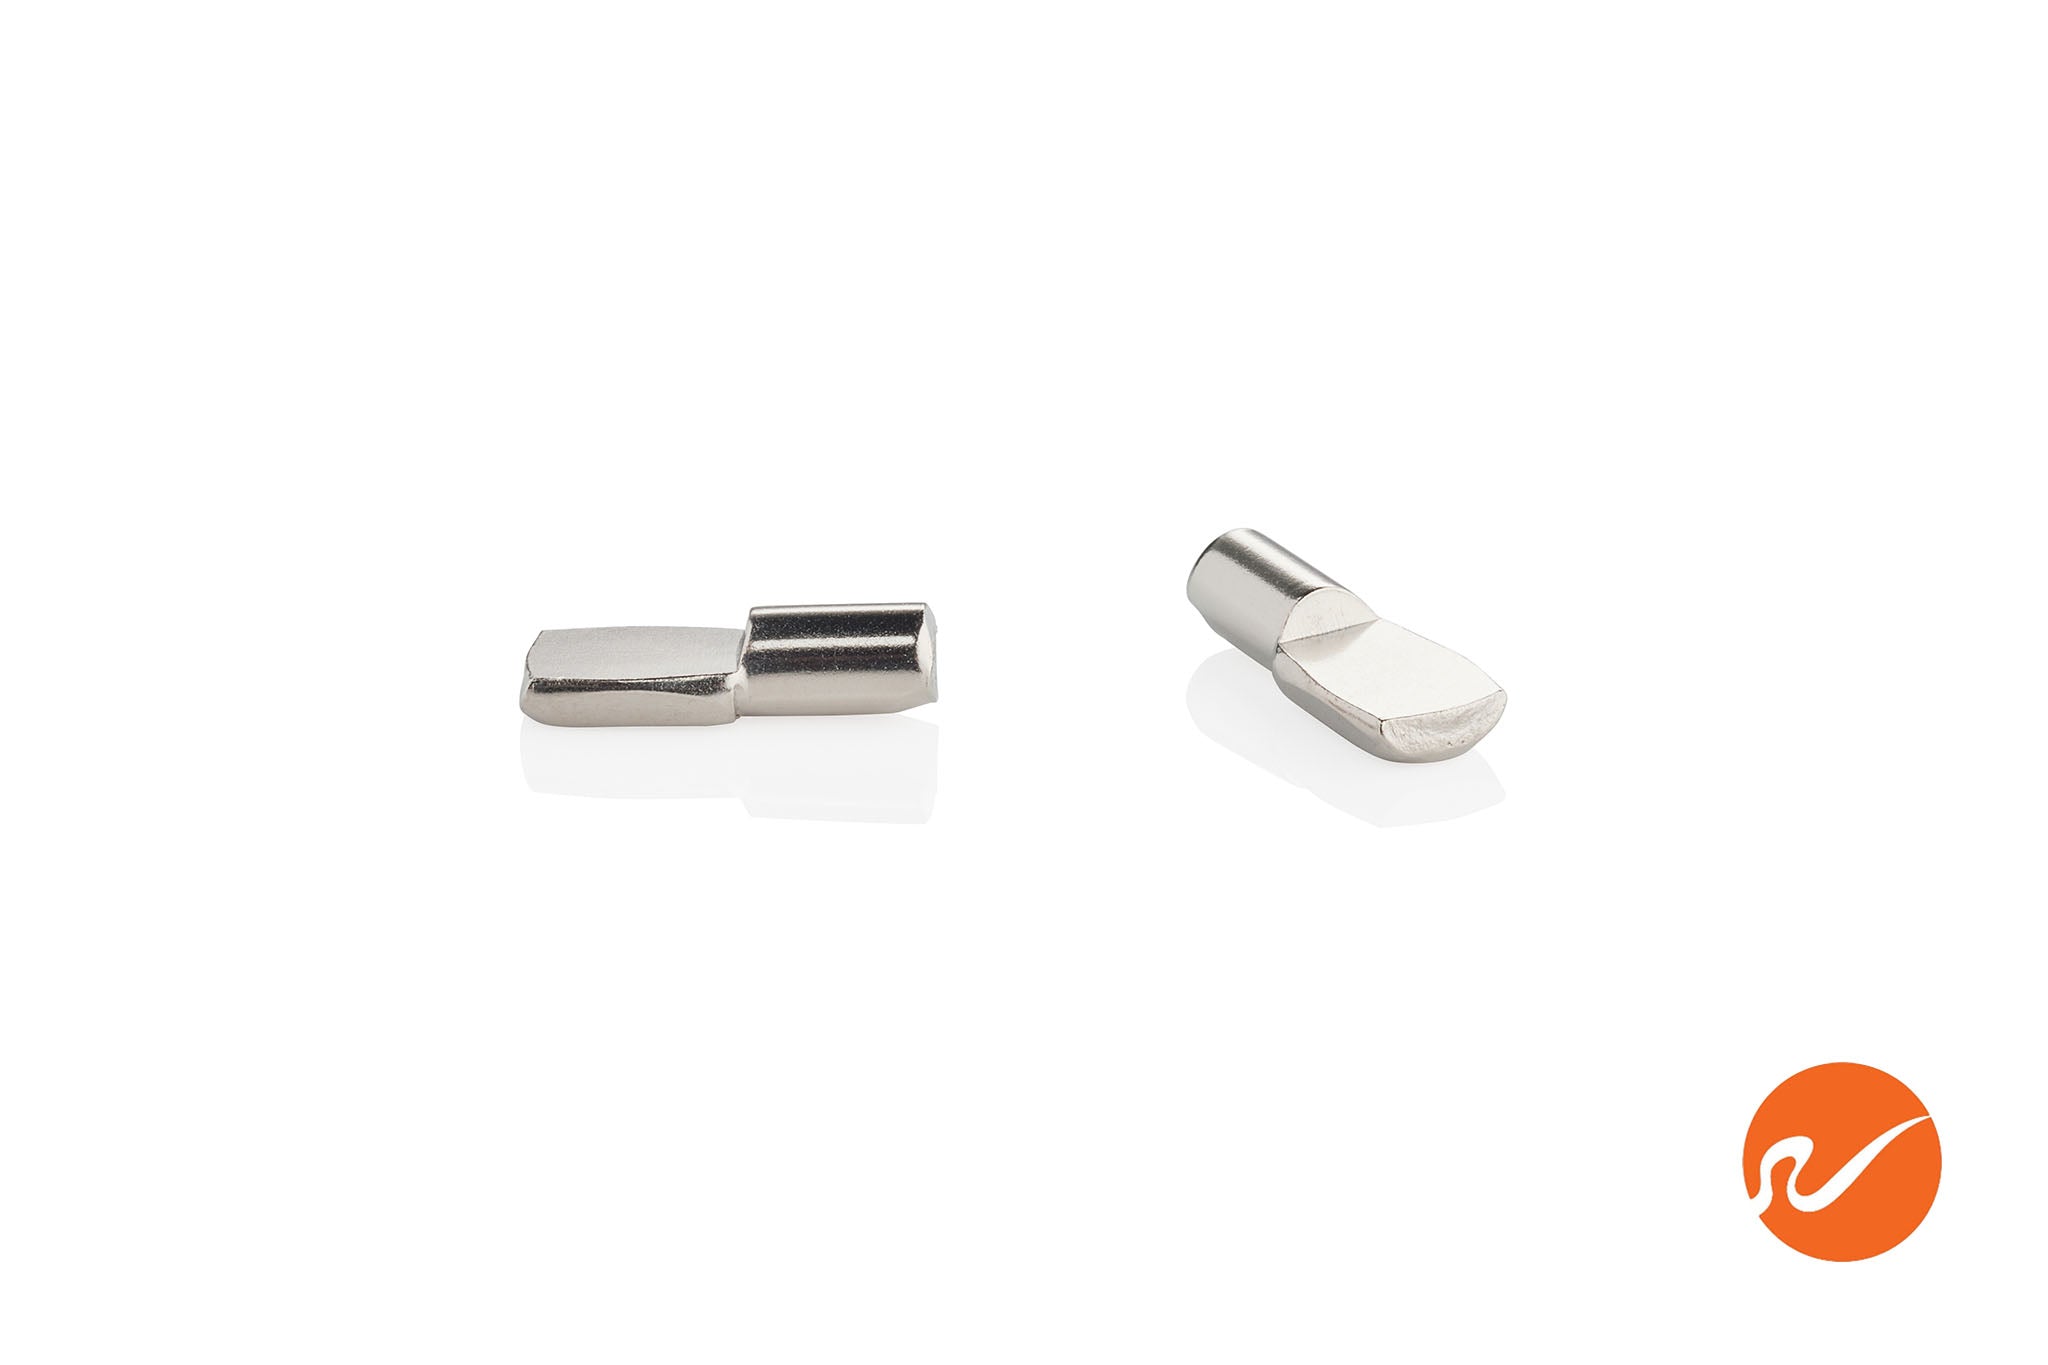 5mm Nickel Shelf Pins - WidgetCo